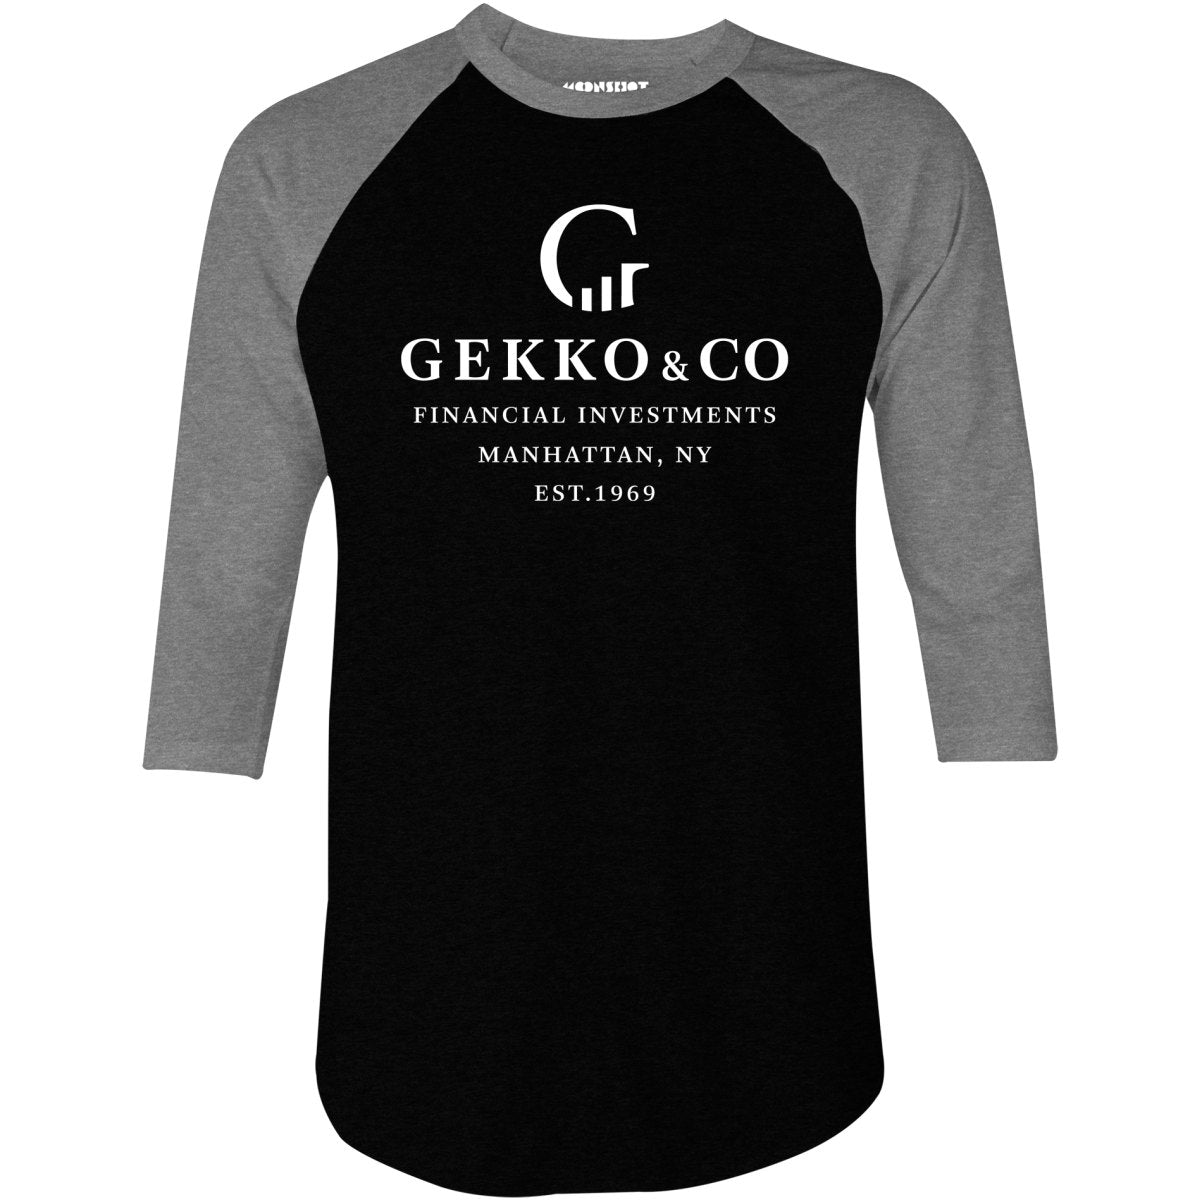 Gekko & Co. Financial Investments - Wall Street - 3/4 Sleeve Raglan T-Shirt